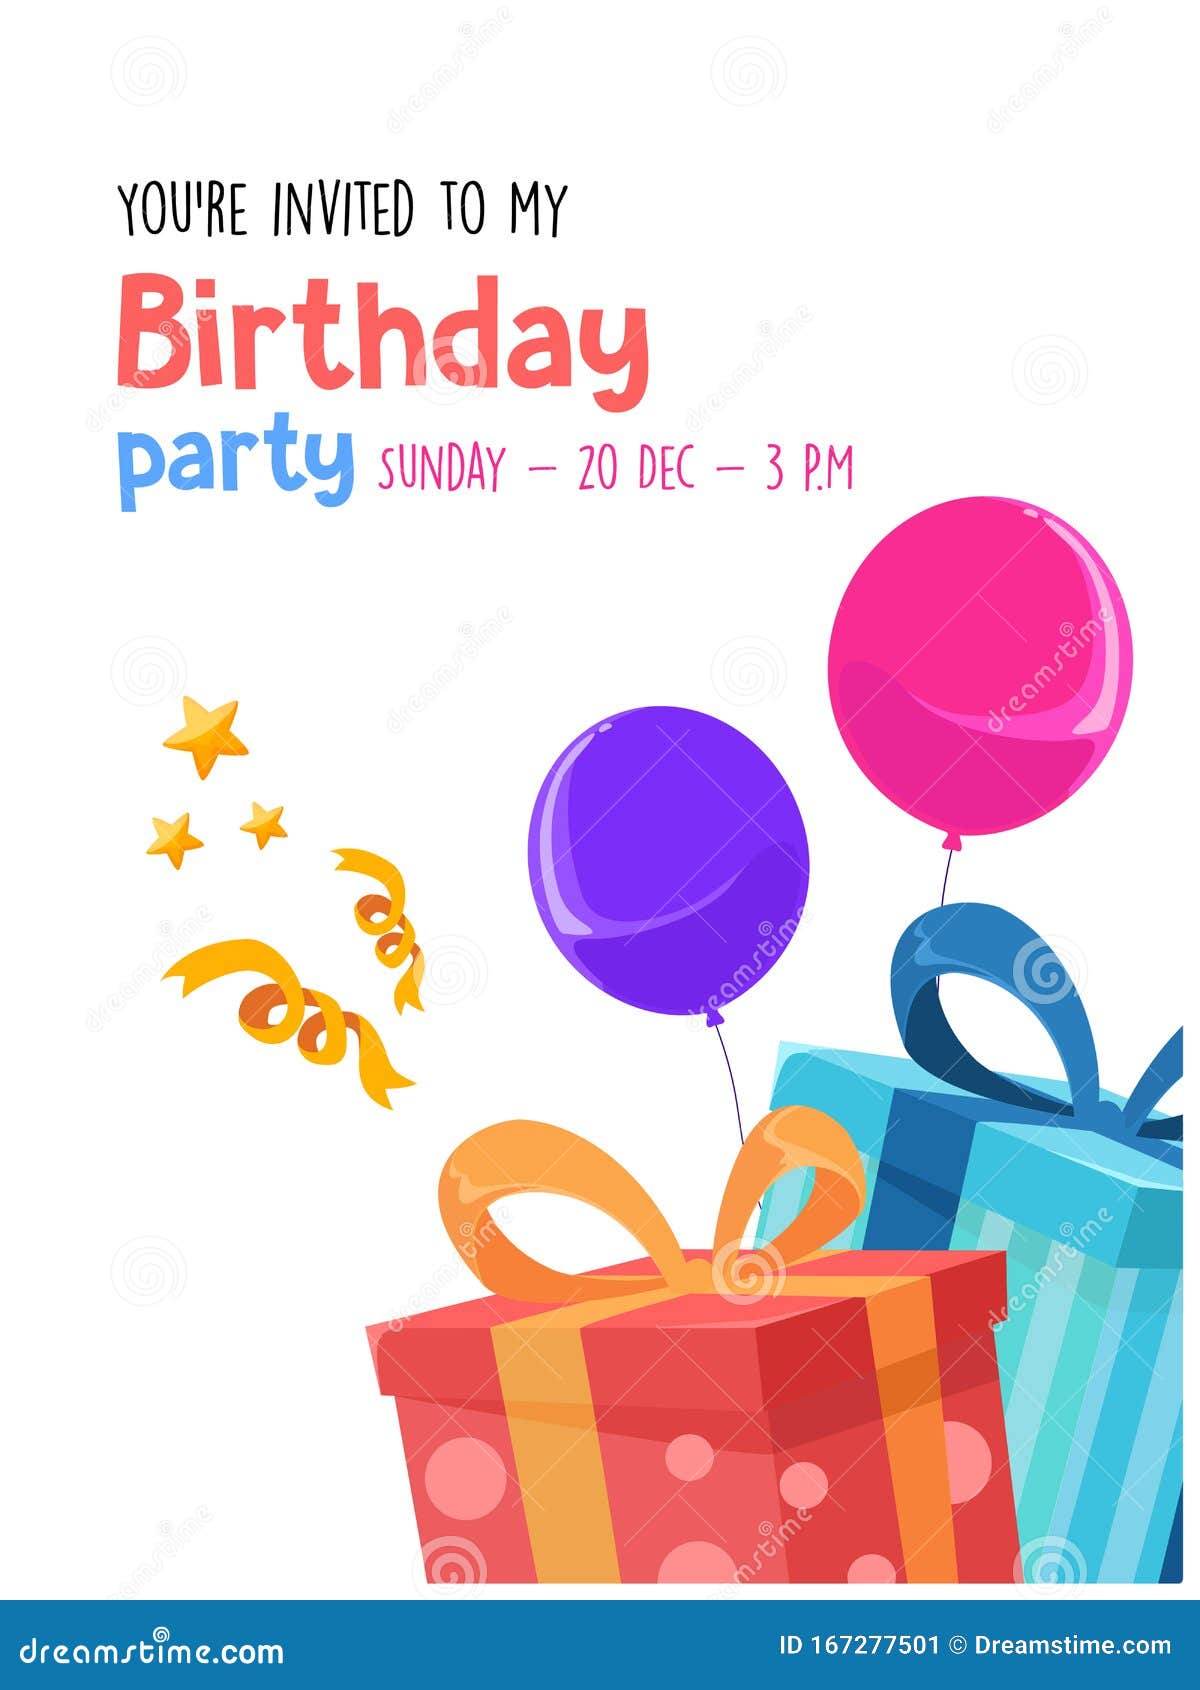 Birthday invitation card stock vector. Illustration of funny - 167277501